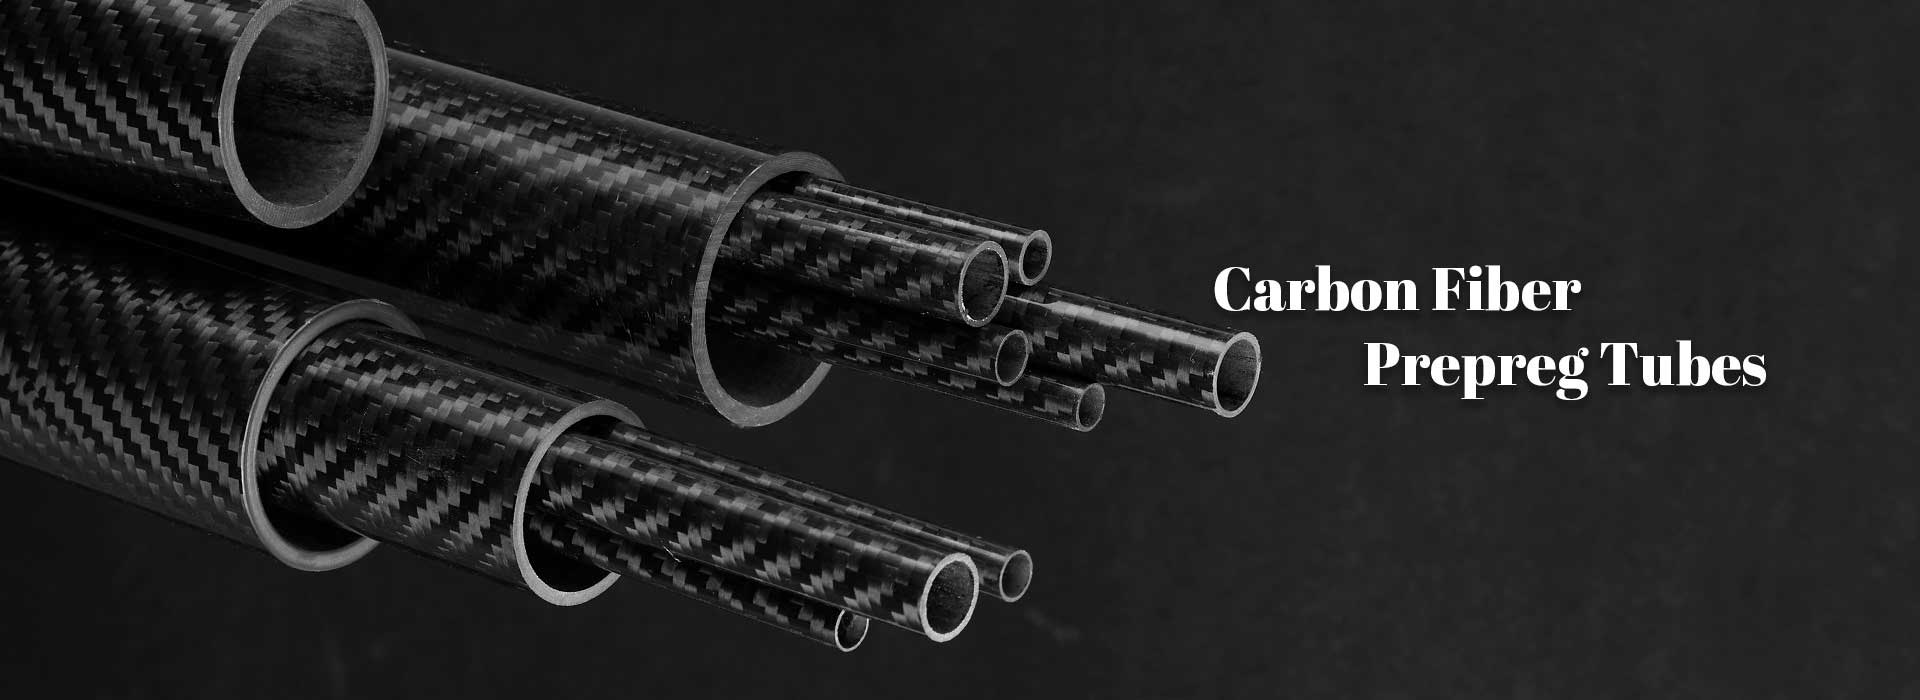 Prepreg Carbon Fiber Tubes | NitPro Composites